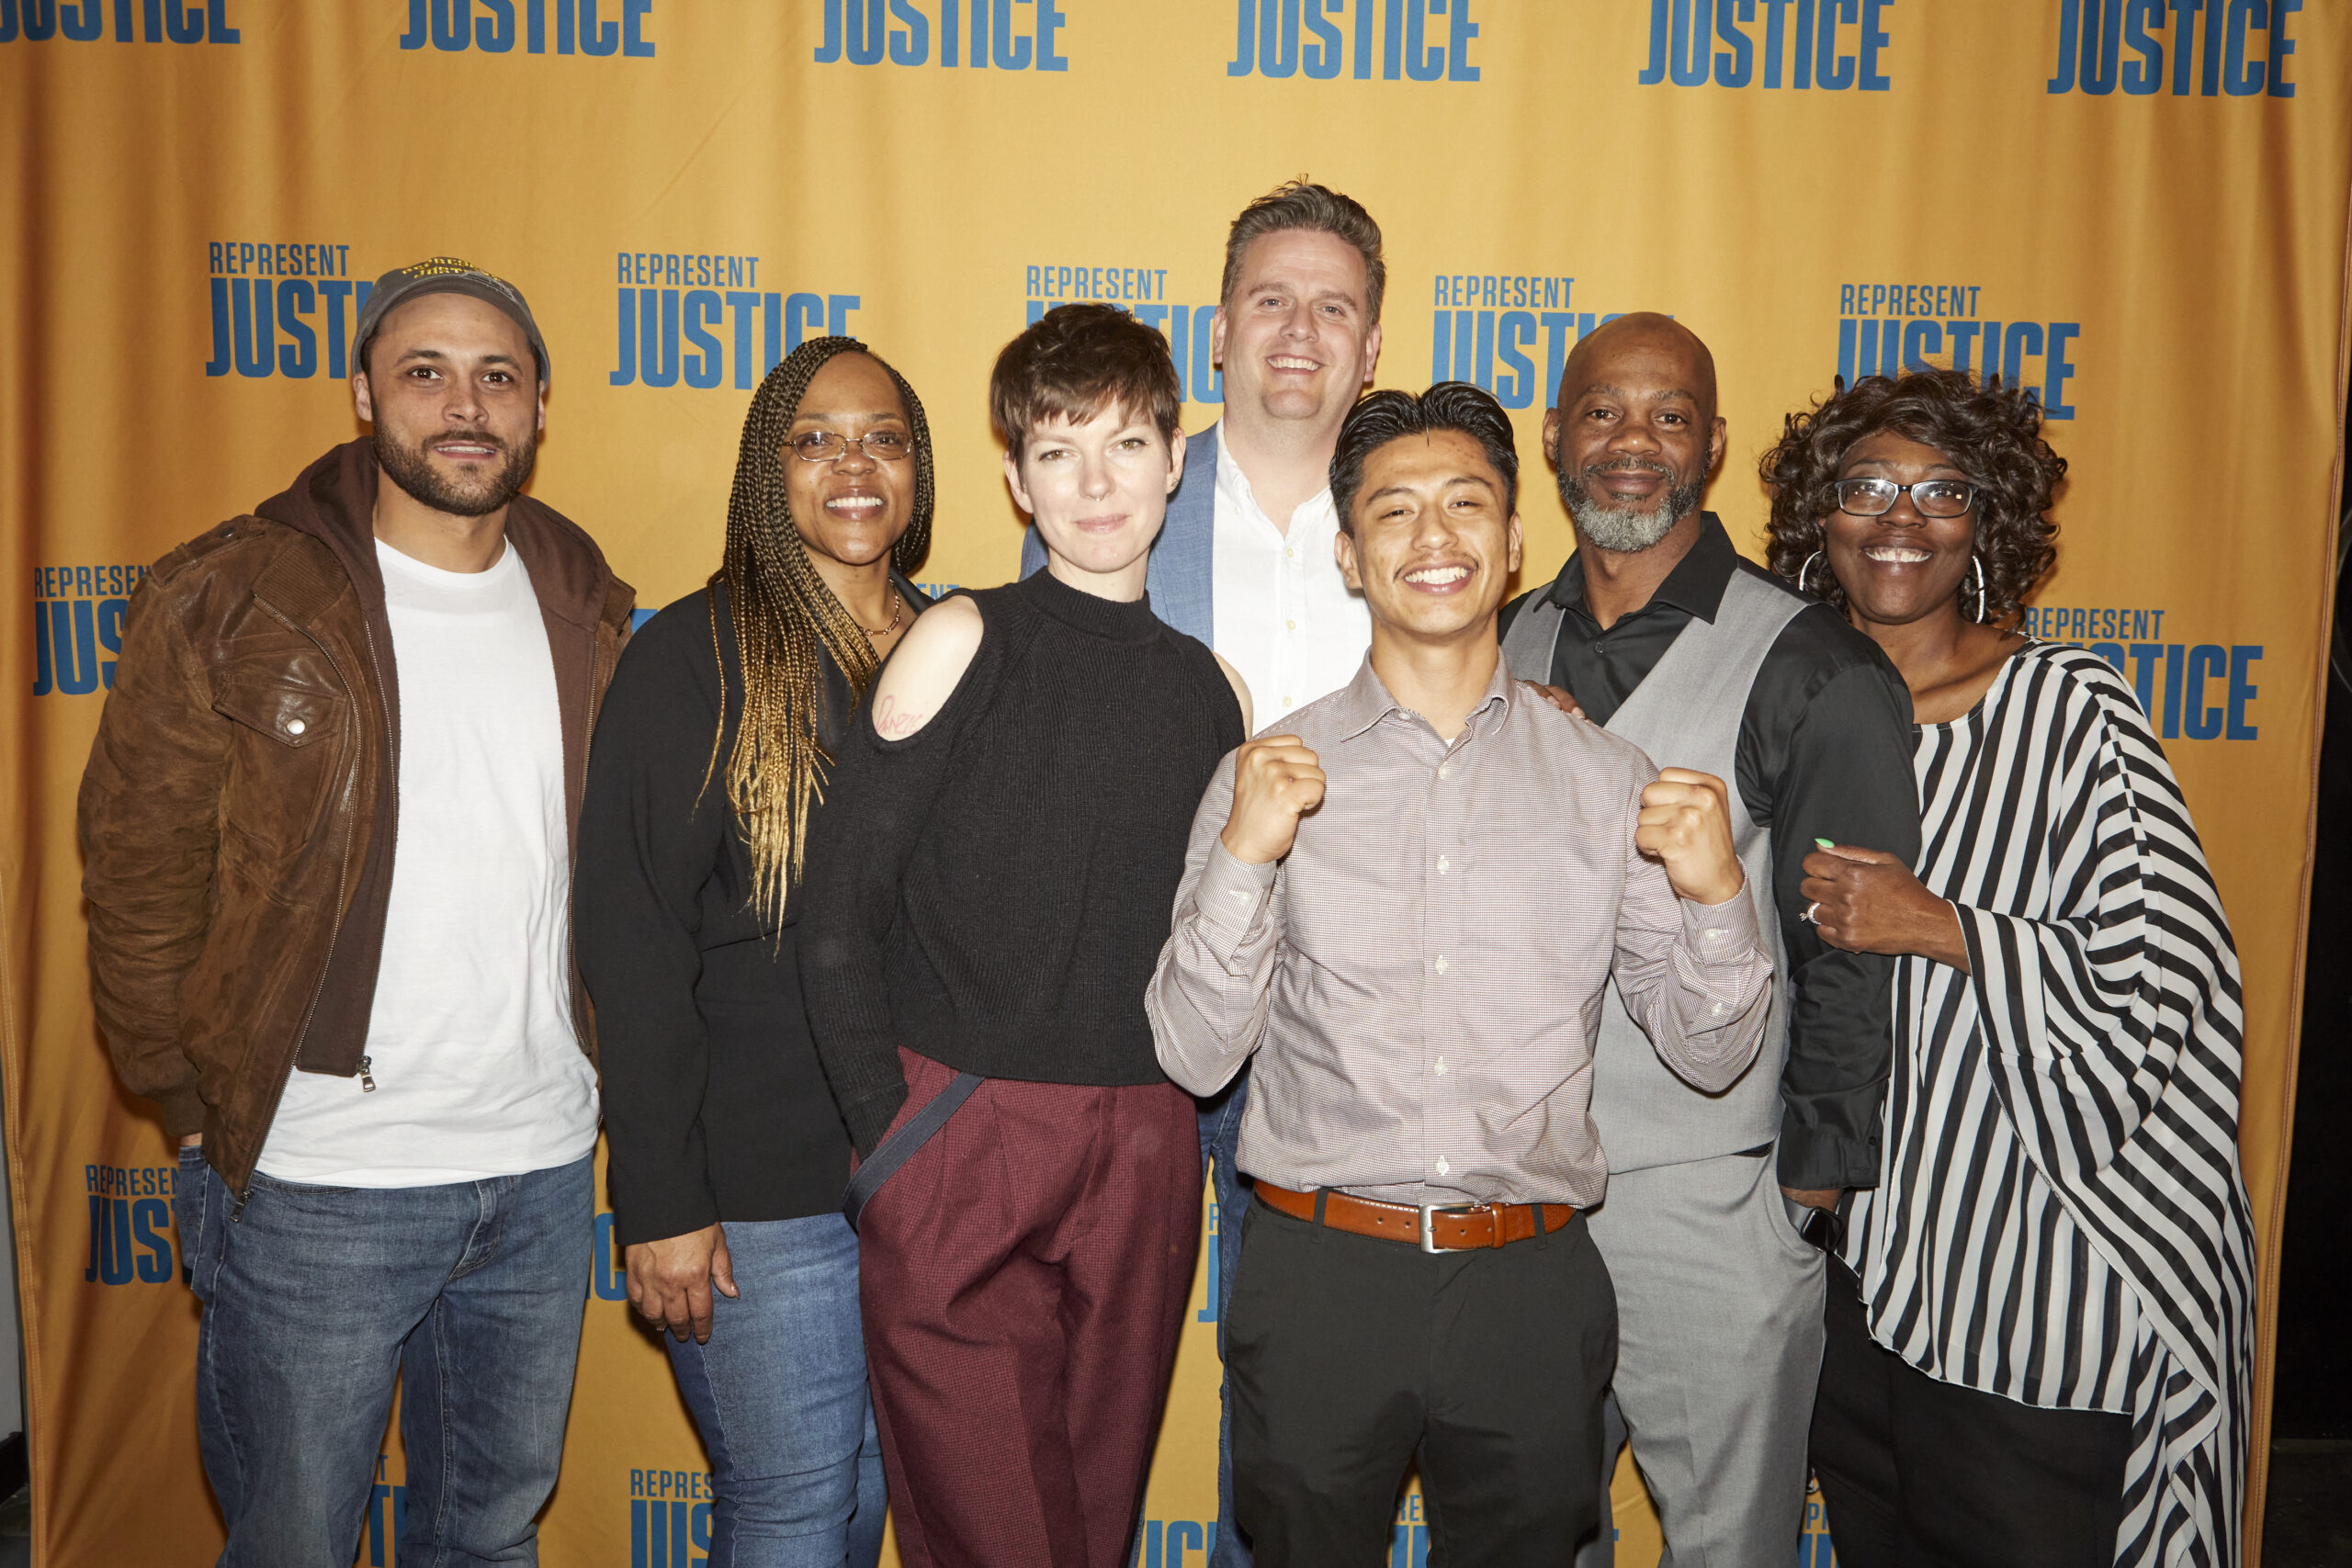 Seven Represent Justice Ambassadors pose for a picture